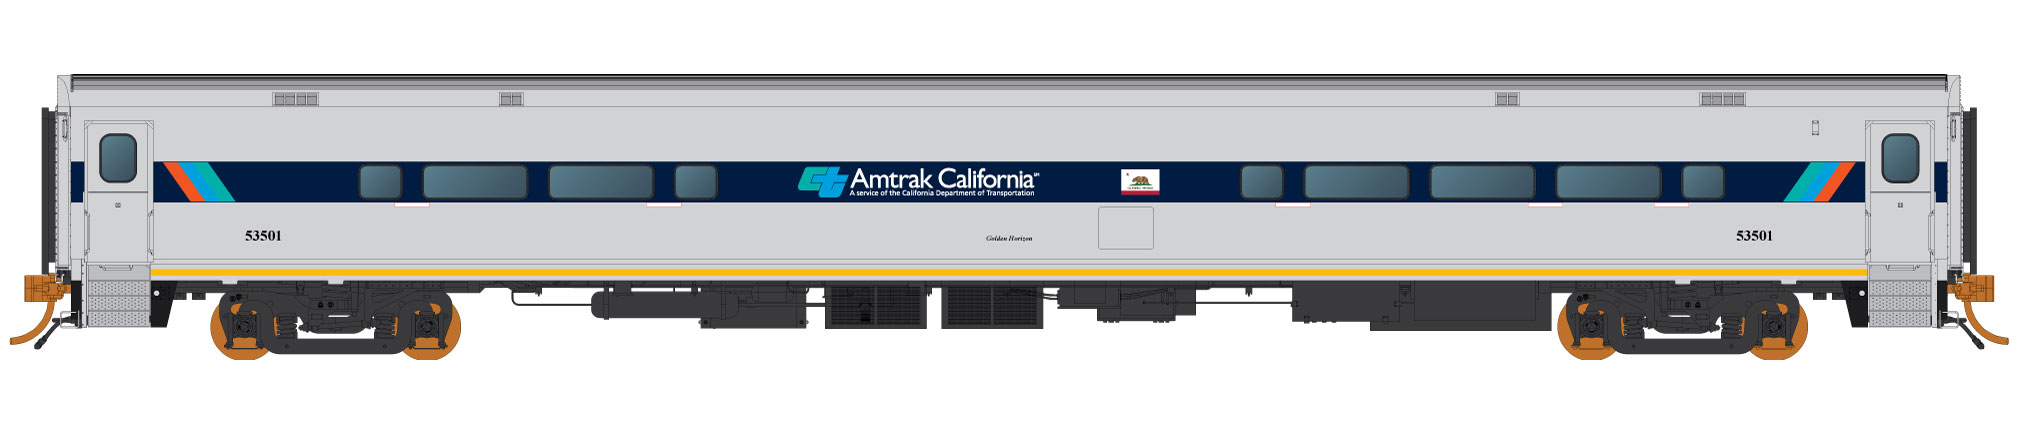 Rapido 528048 - N Scale Horizon Fleet Dinette - Amtrak California (Golden Horizon) #53501